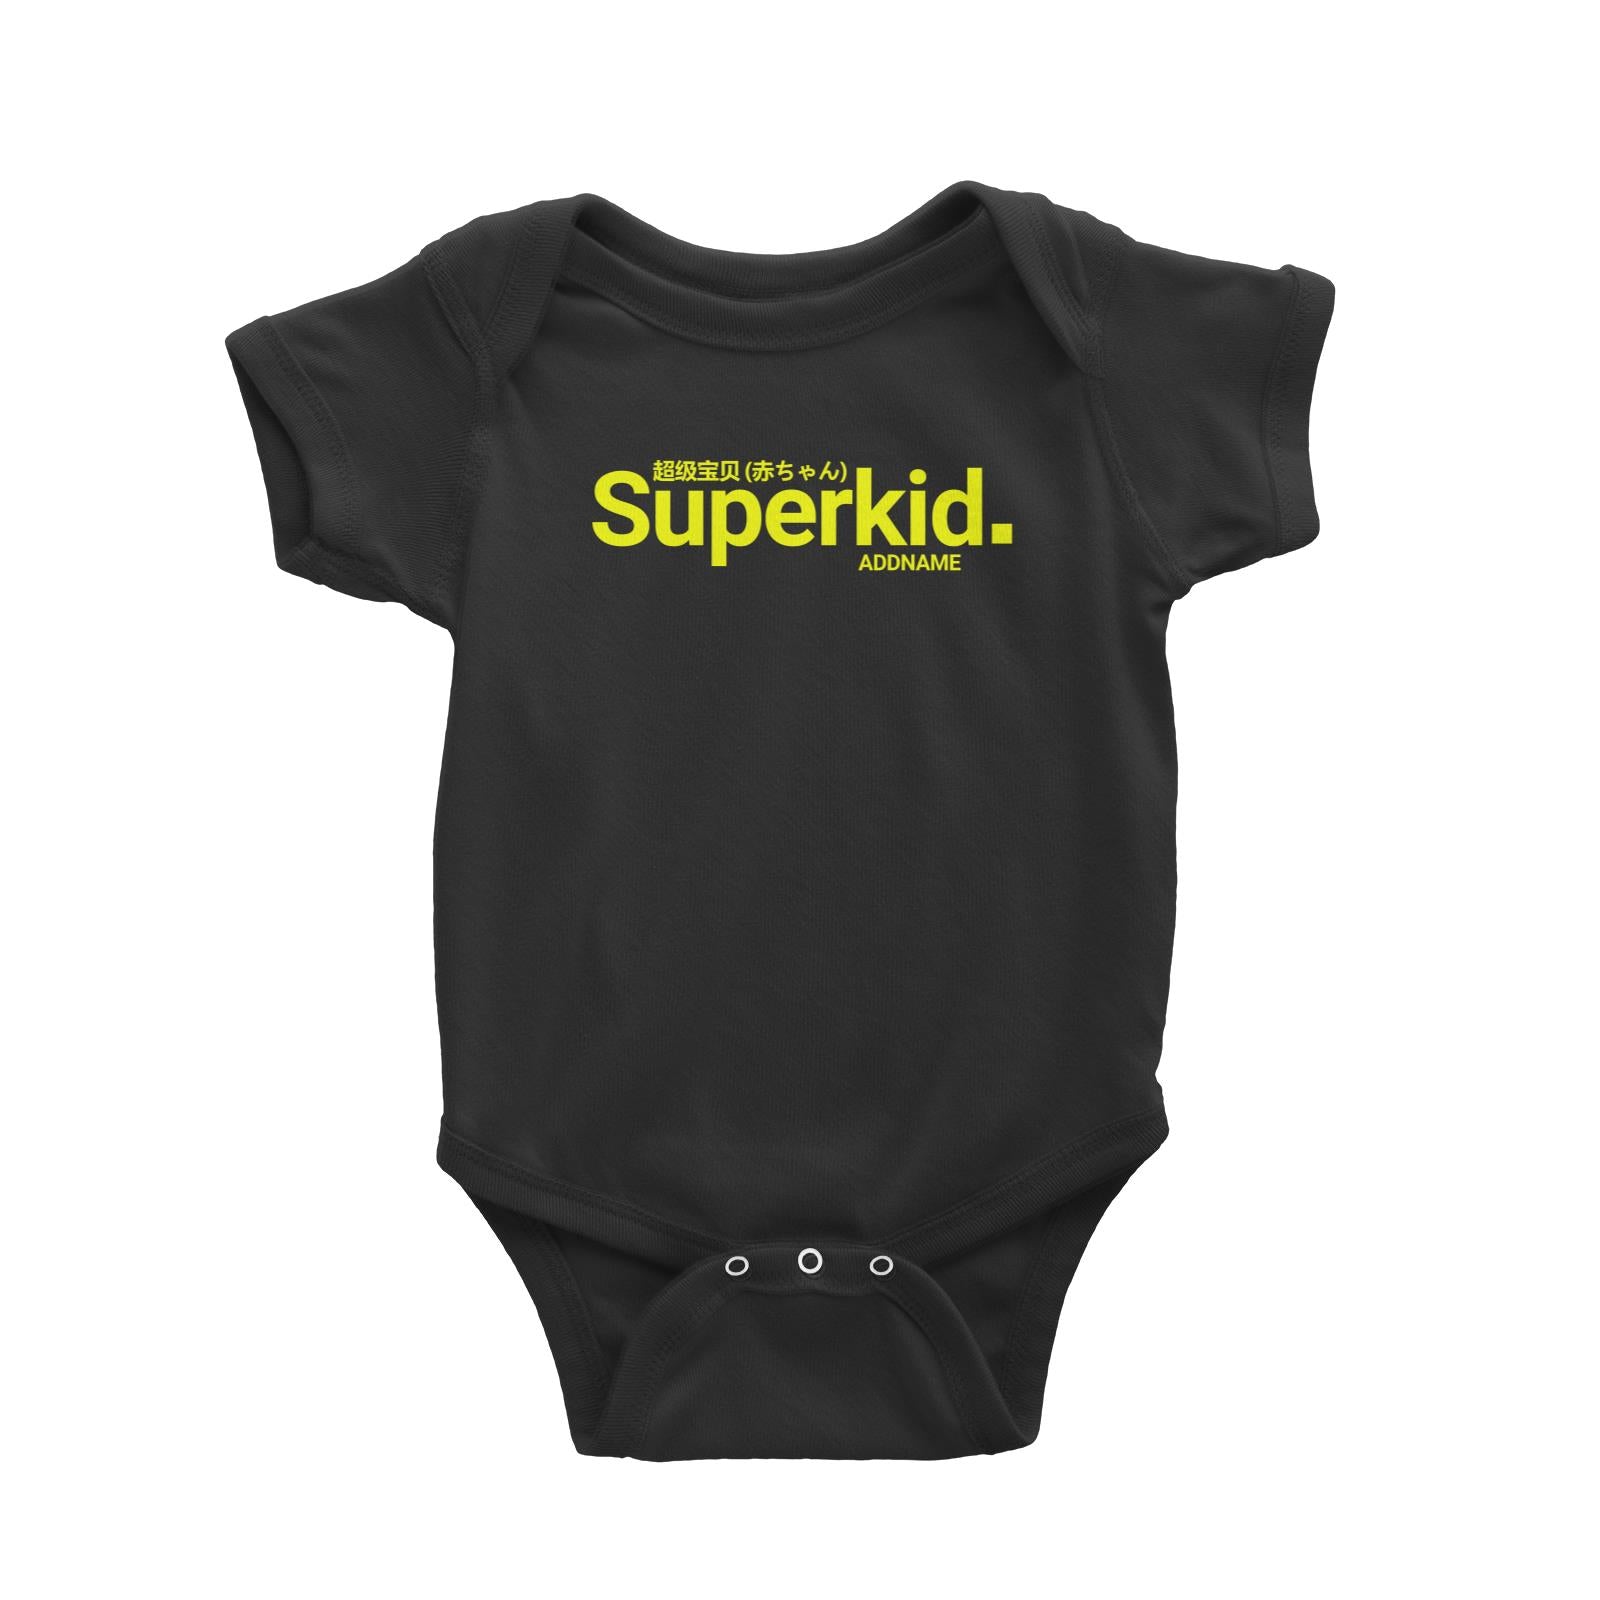 Streetwear Superkid Addname Baby Romper